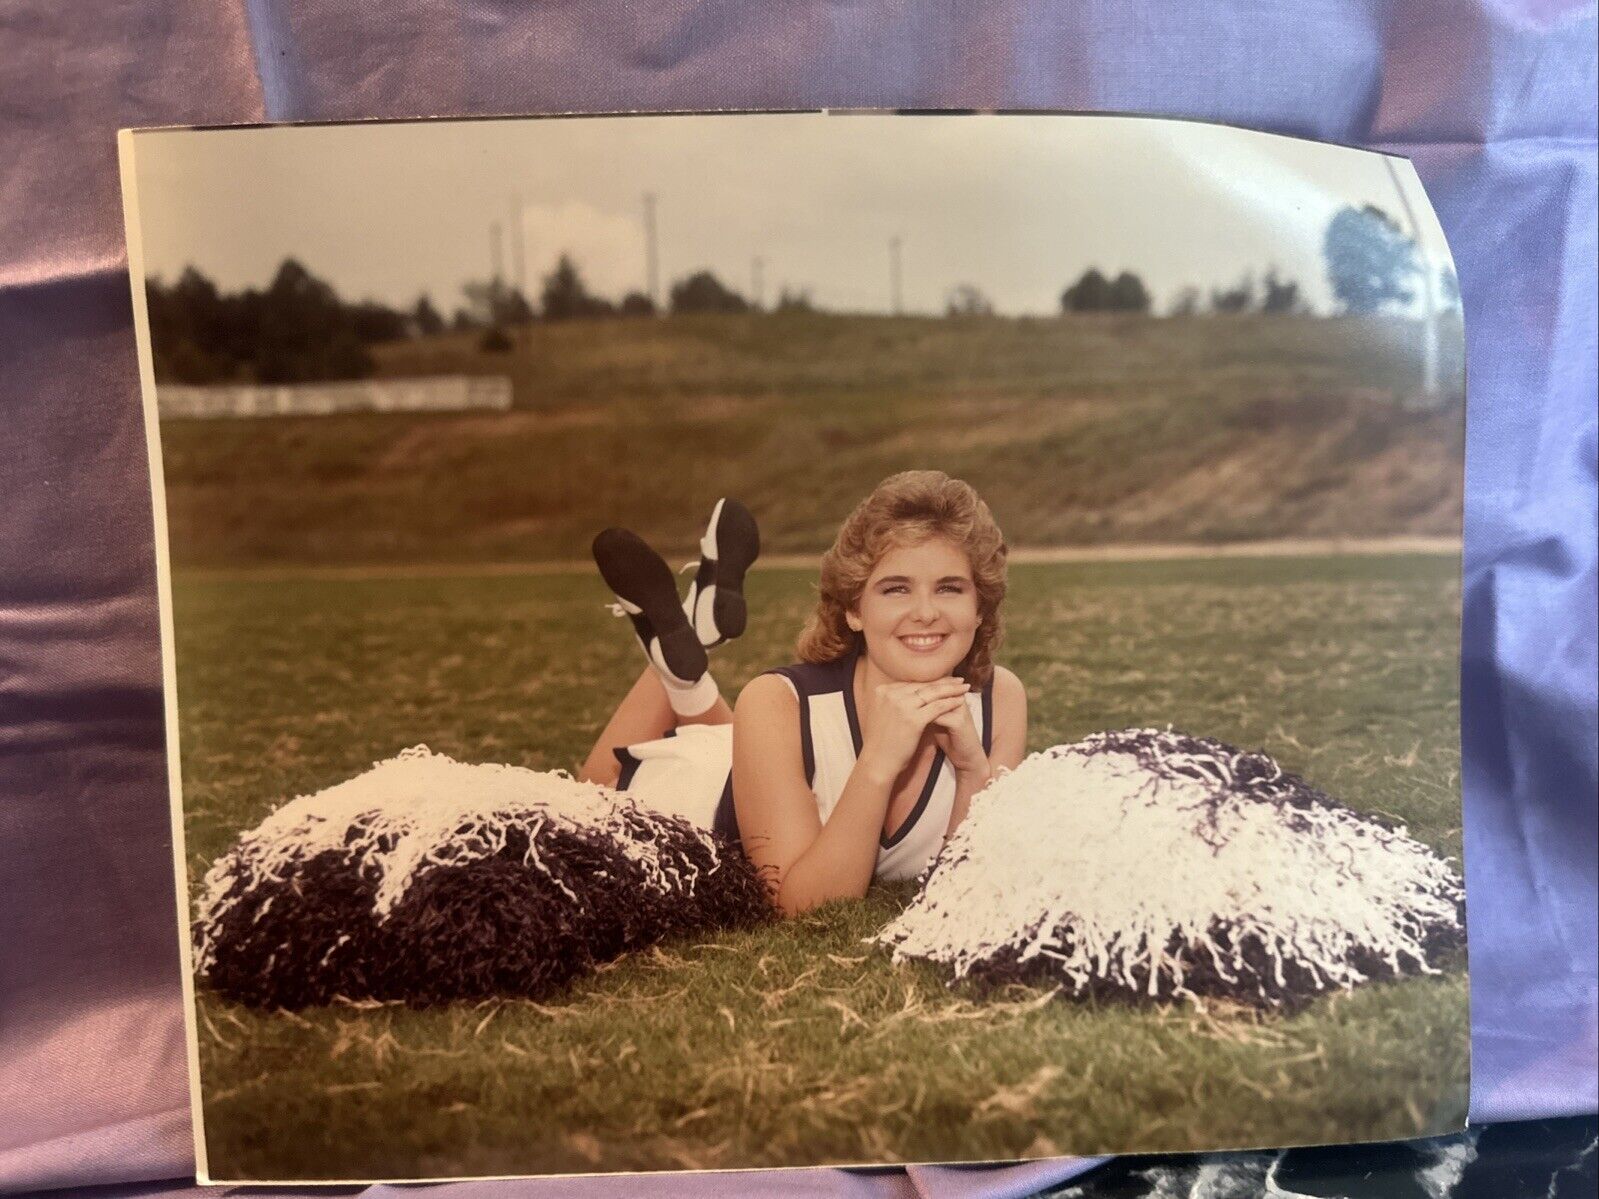 1981 8x10 Color Photo Cheerleader Teen In Football Field Posing